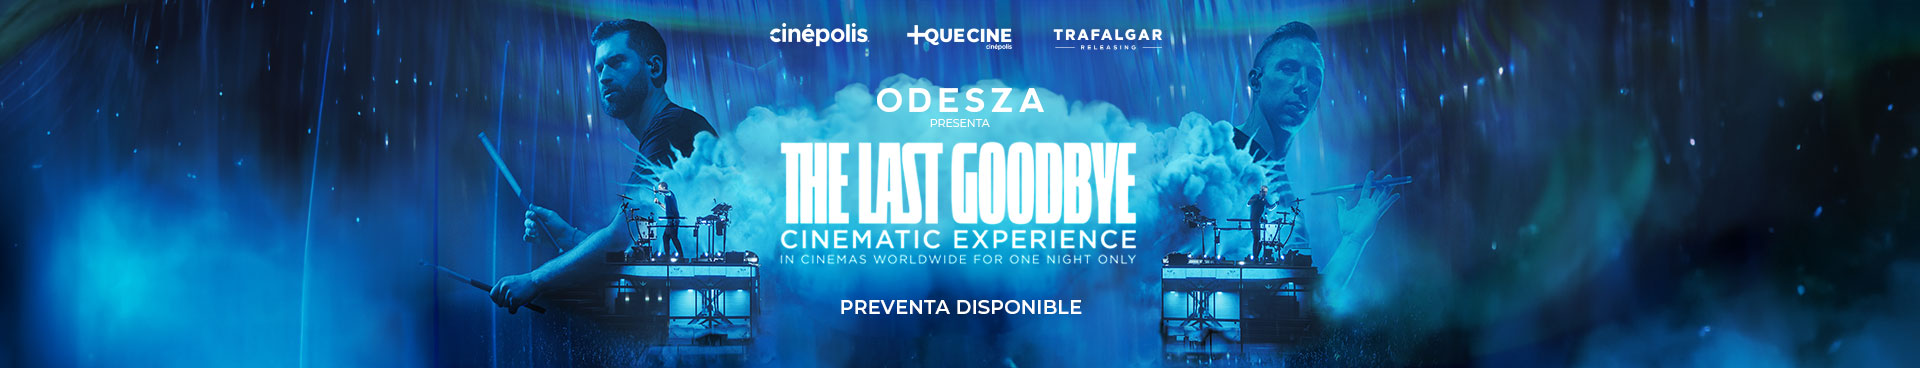  ODESZA: THE LAST GOODBYE